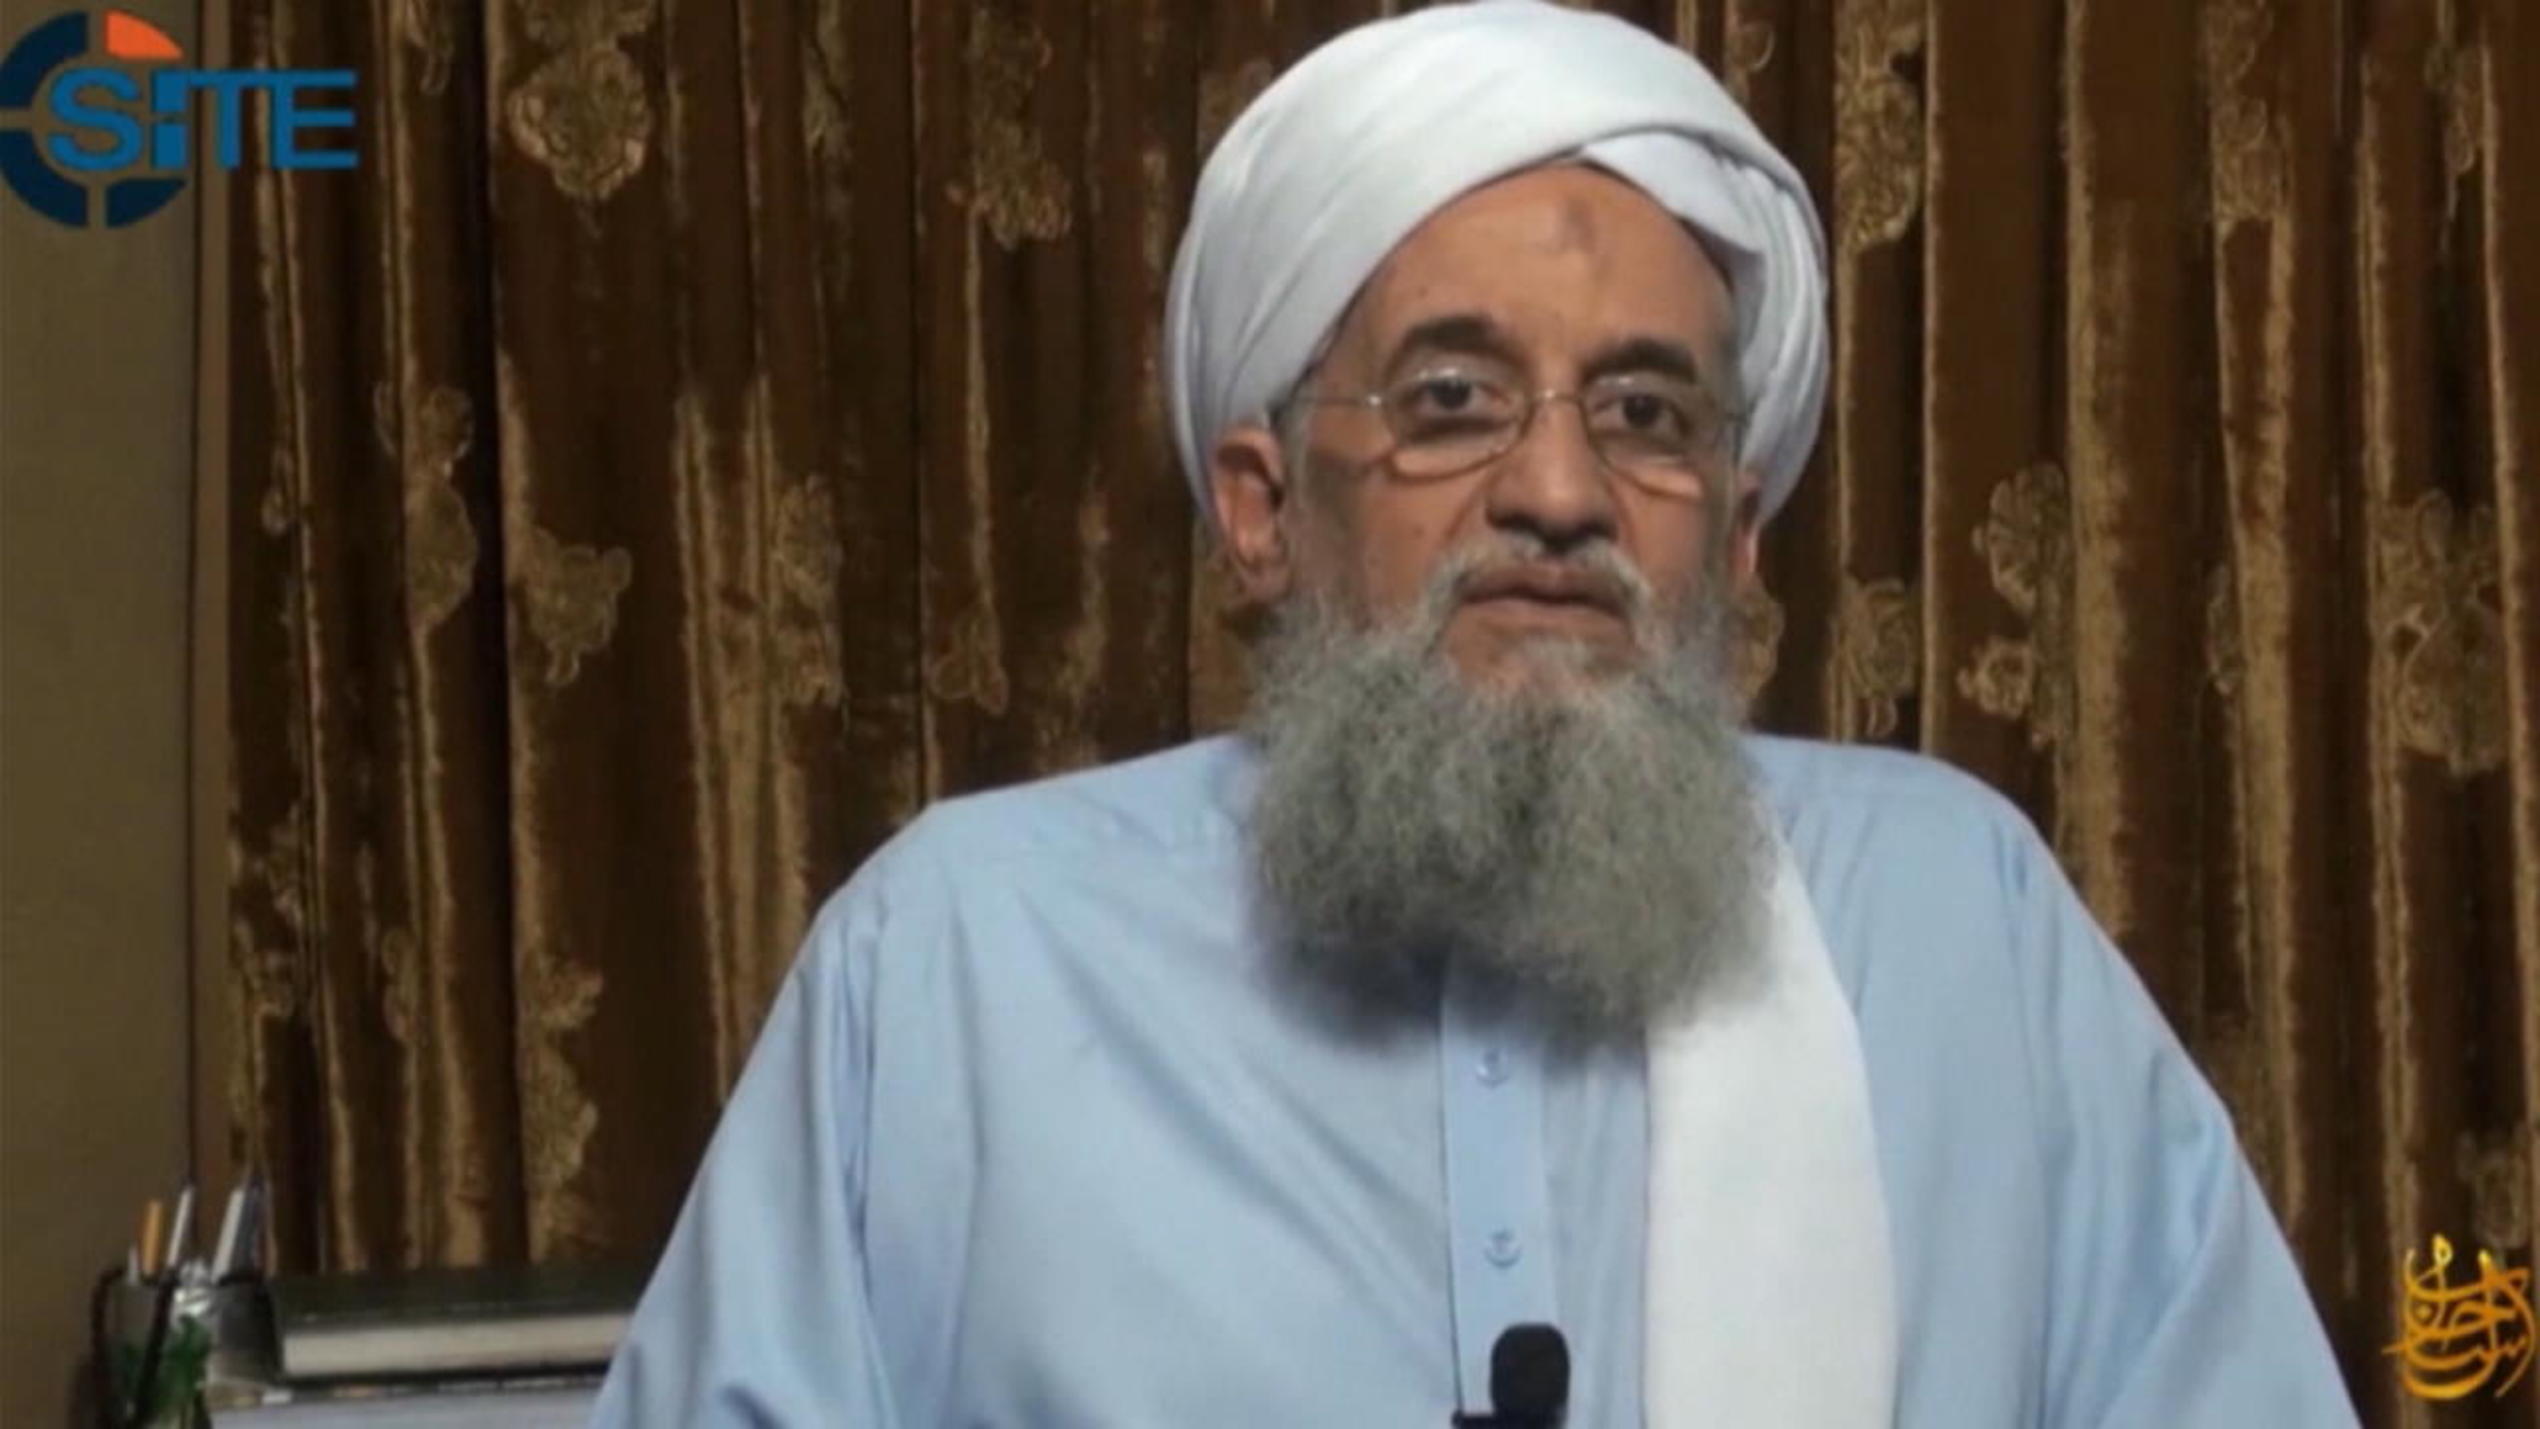 Al-Qaida-Terrorchef al-Sawahiri tot durch Drohnenangriff